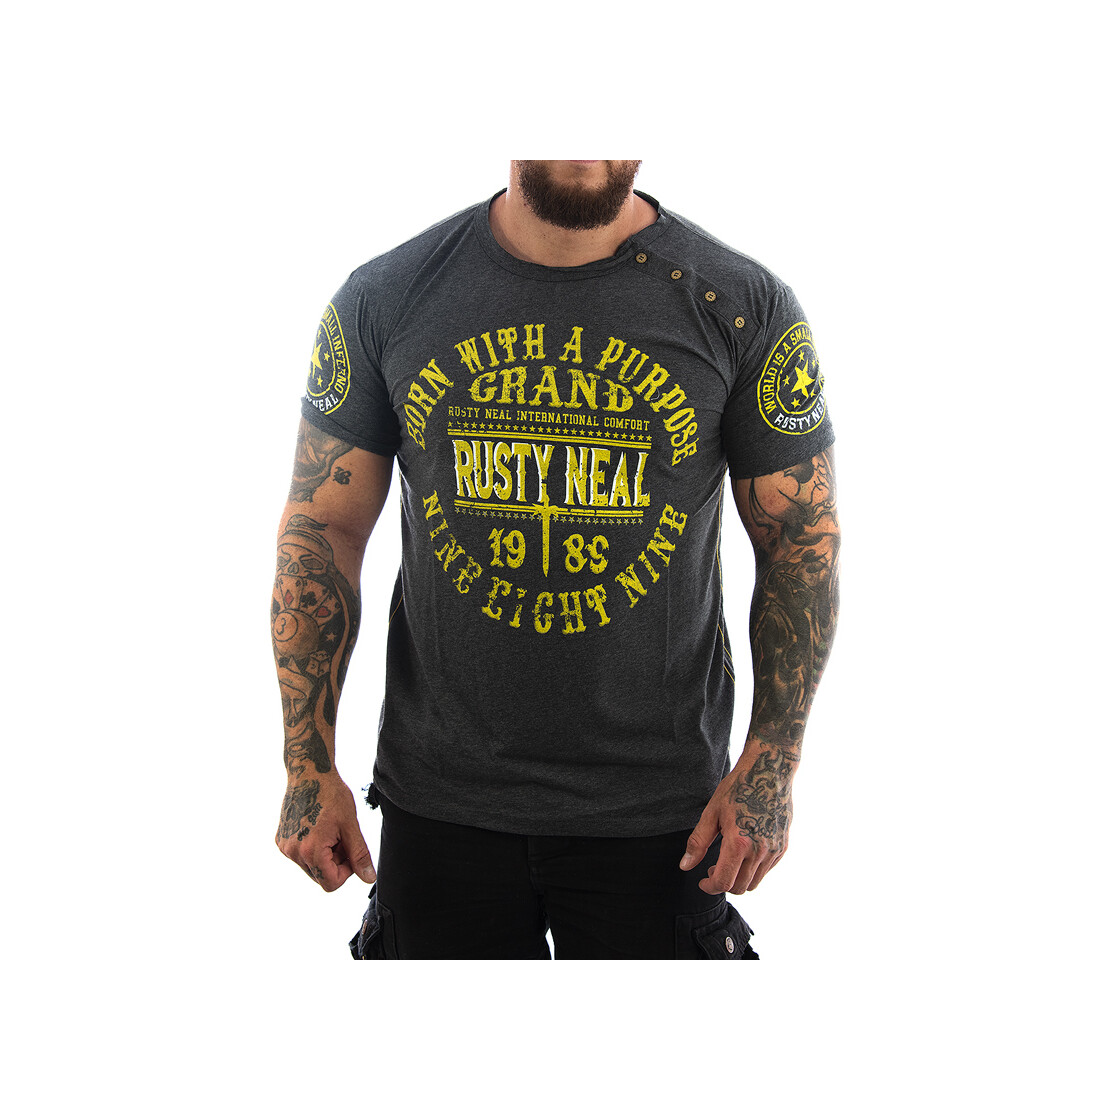 Neal Rusty Men 15216 anthracite T-Shirt Purpose